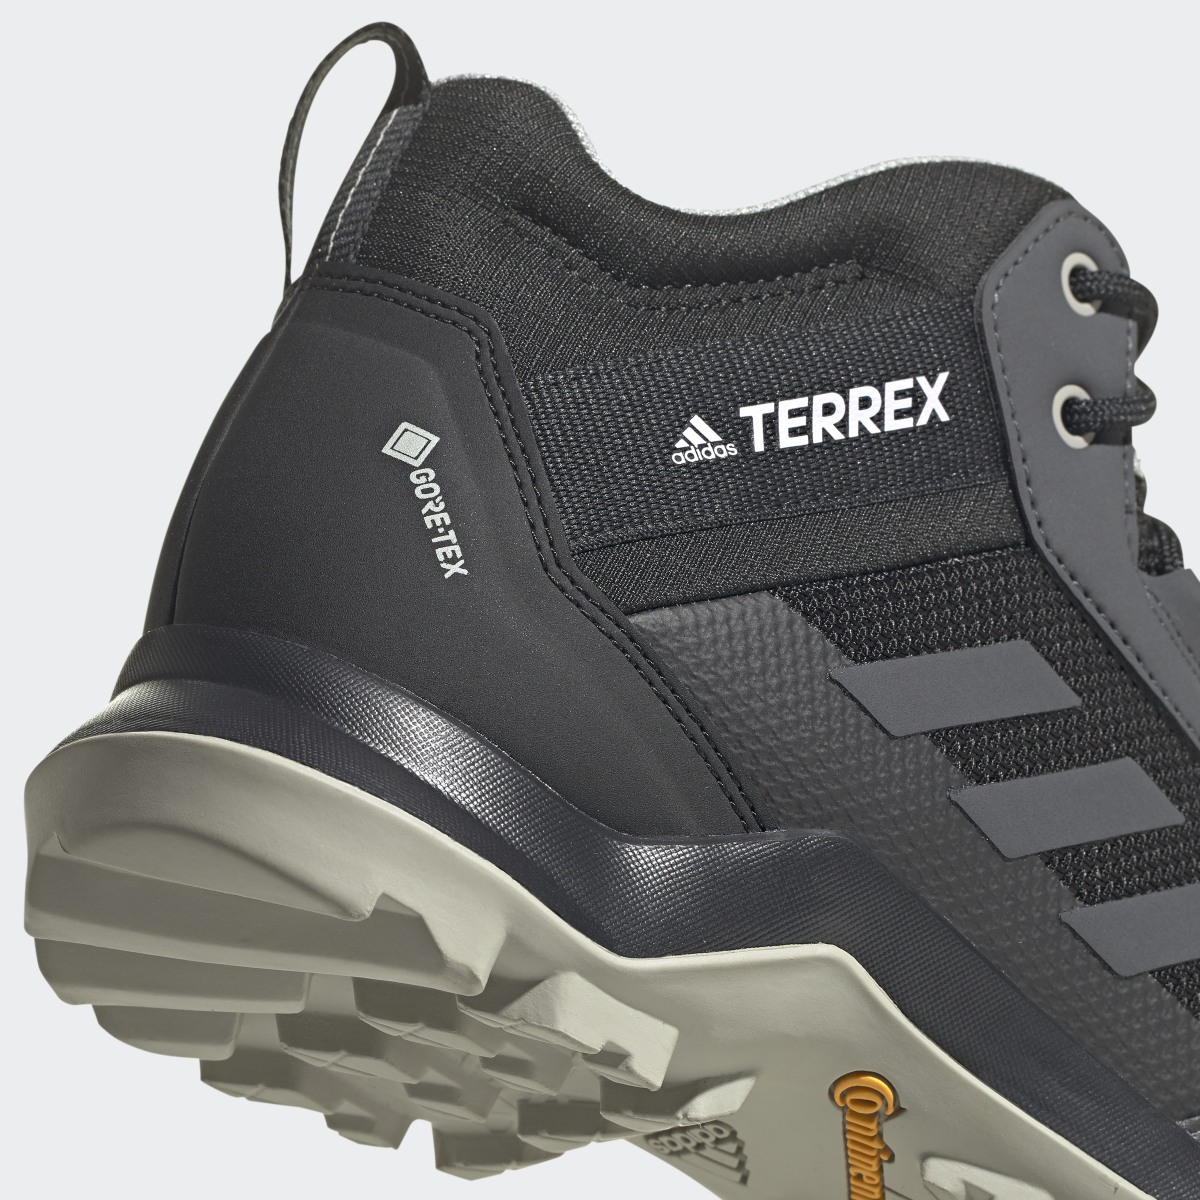 Adidas Sapatos de Caminhada AX3 Mid GORE-TEX TERREX. 15